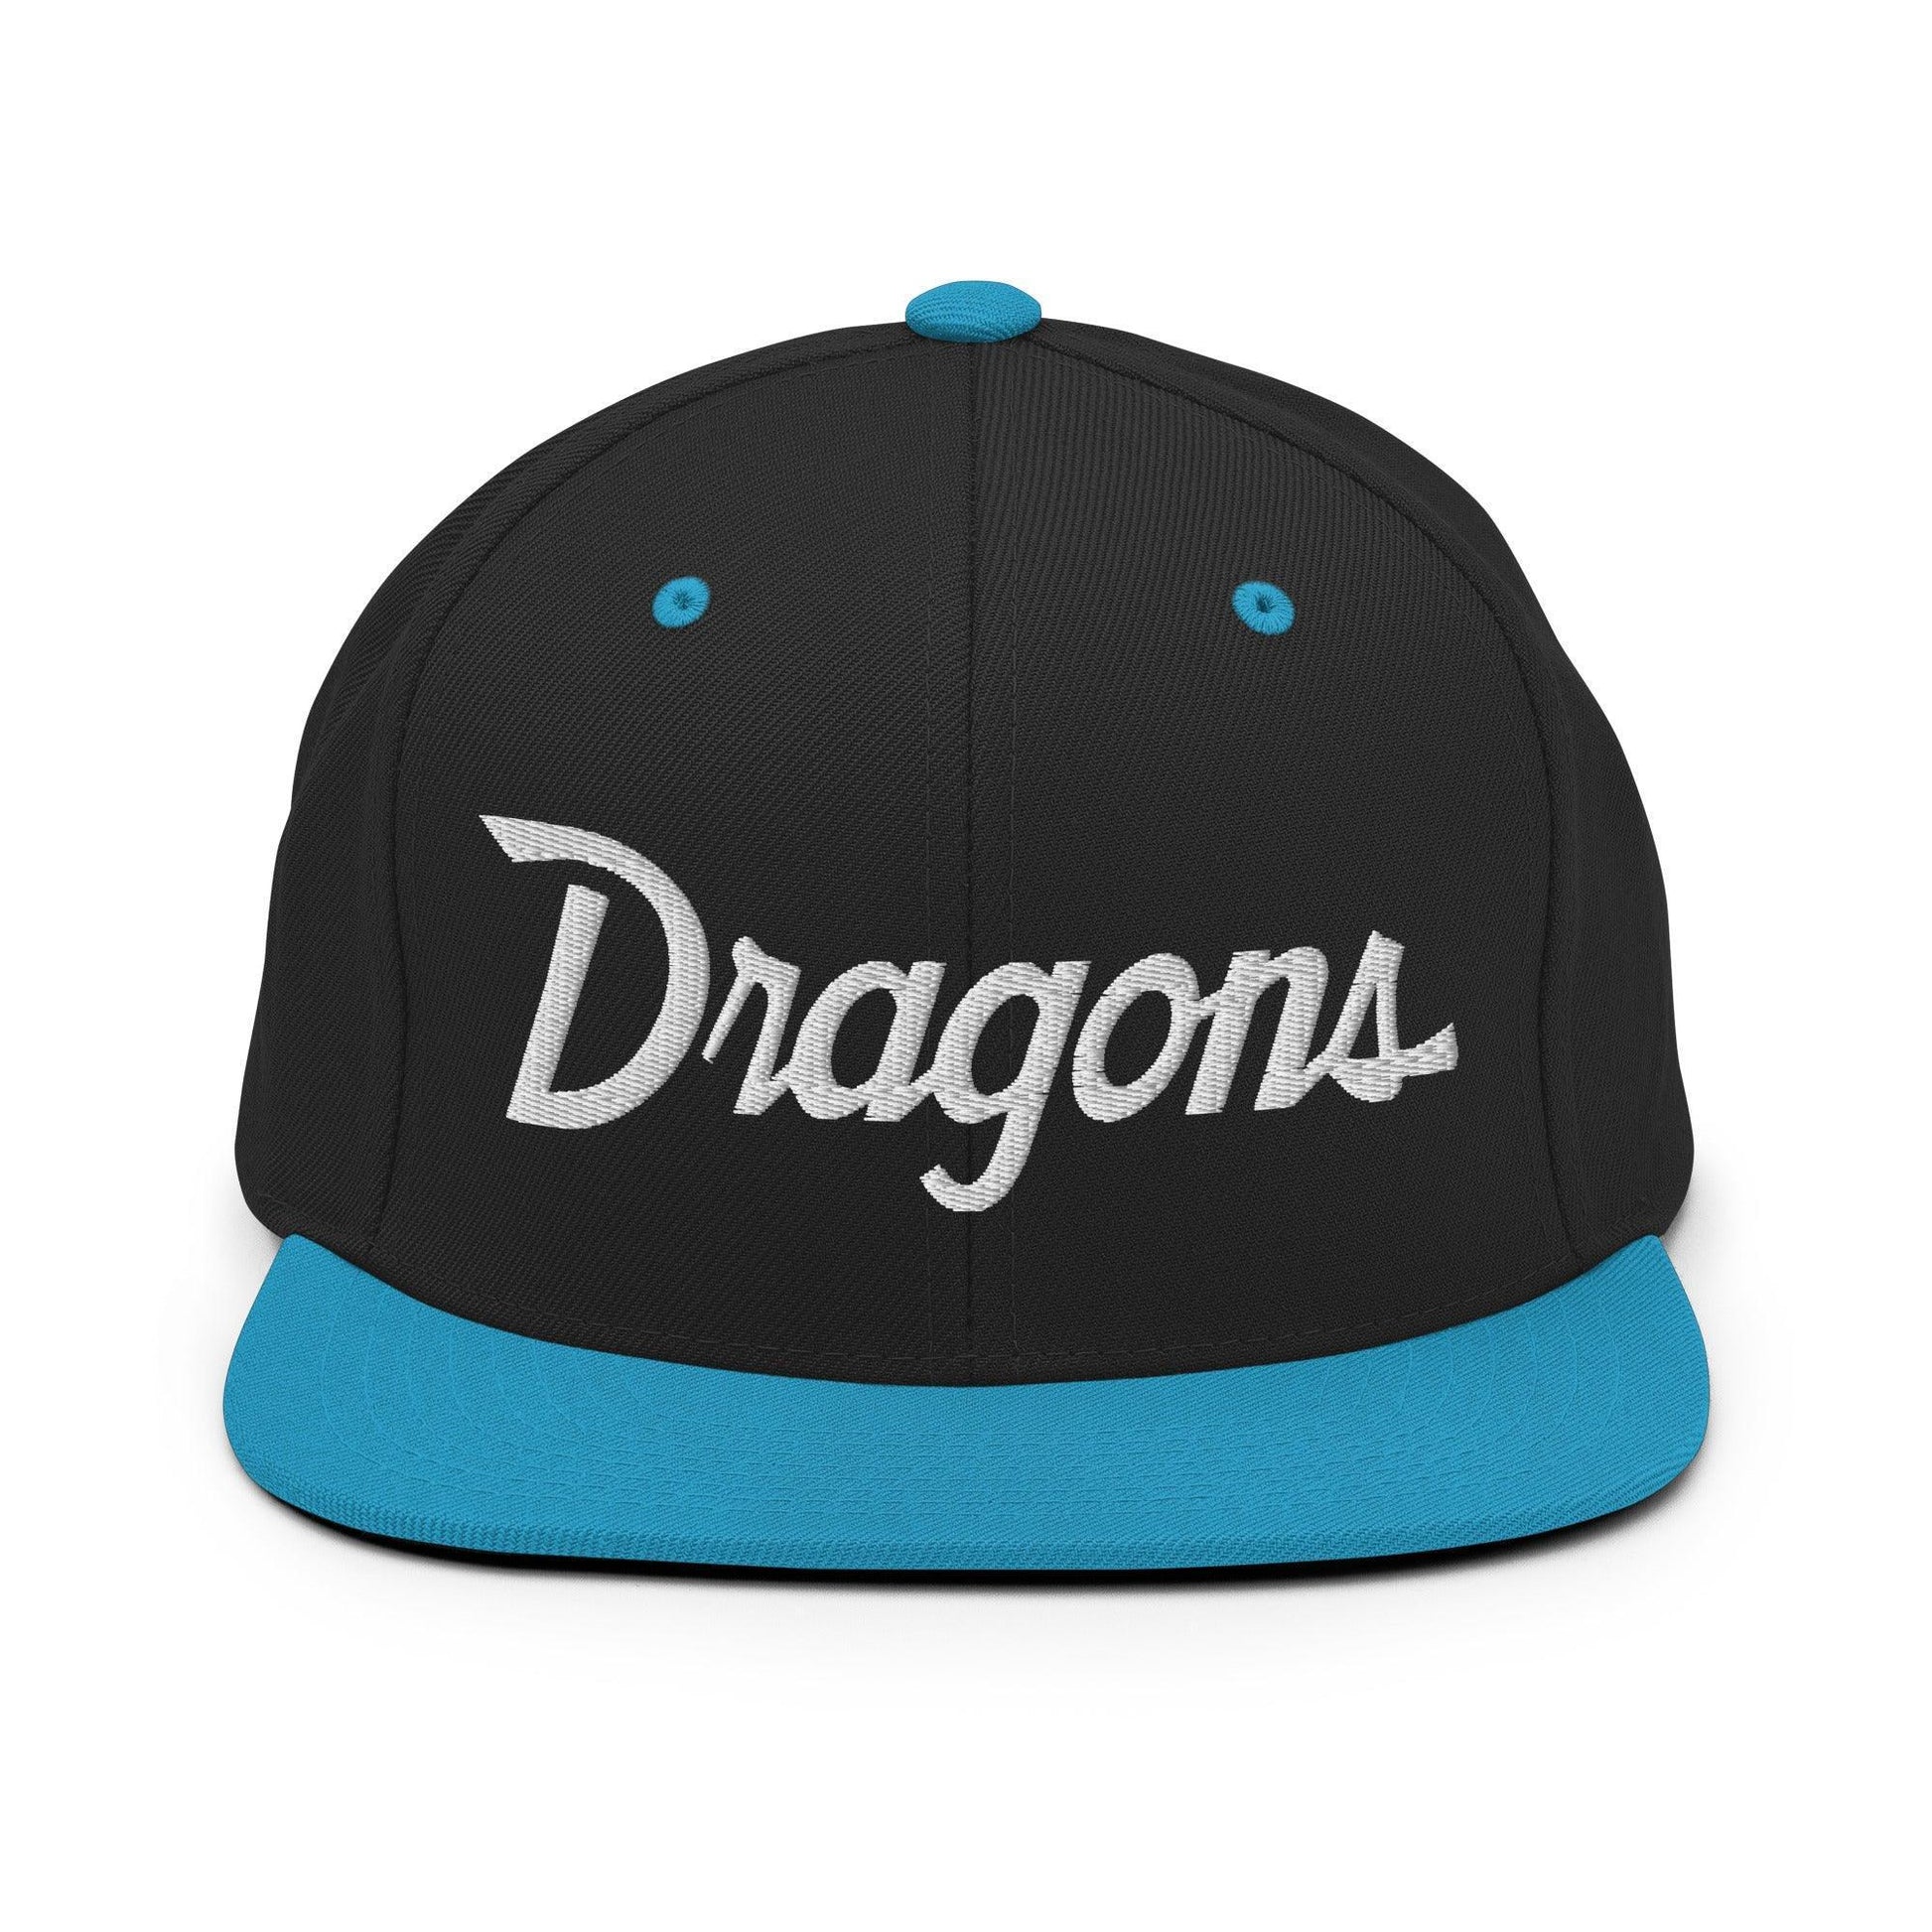 Dragons School Mascot Snapback Hat Black/ Teal